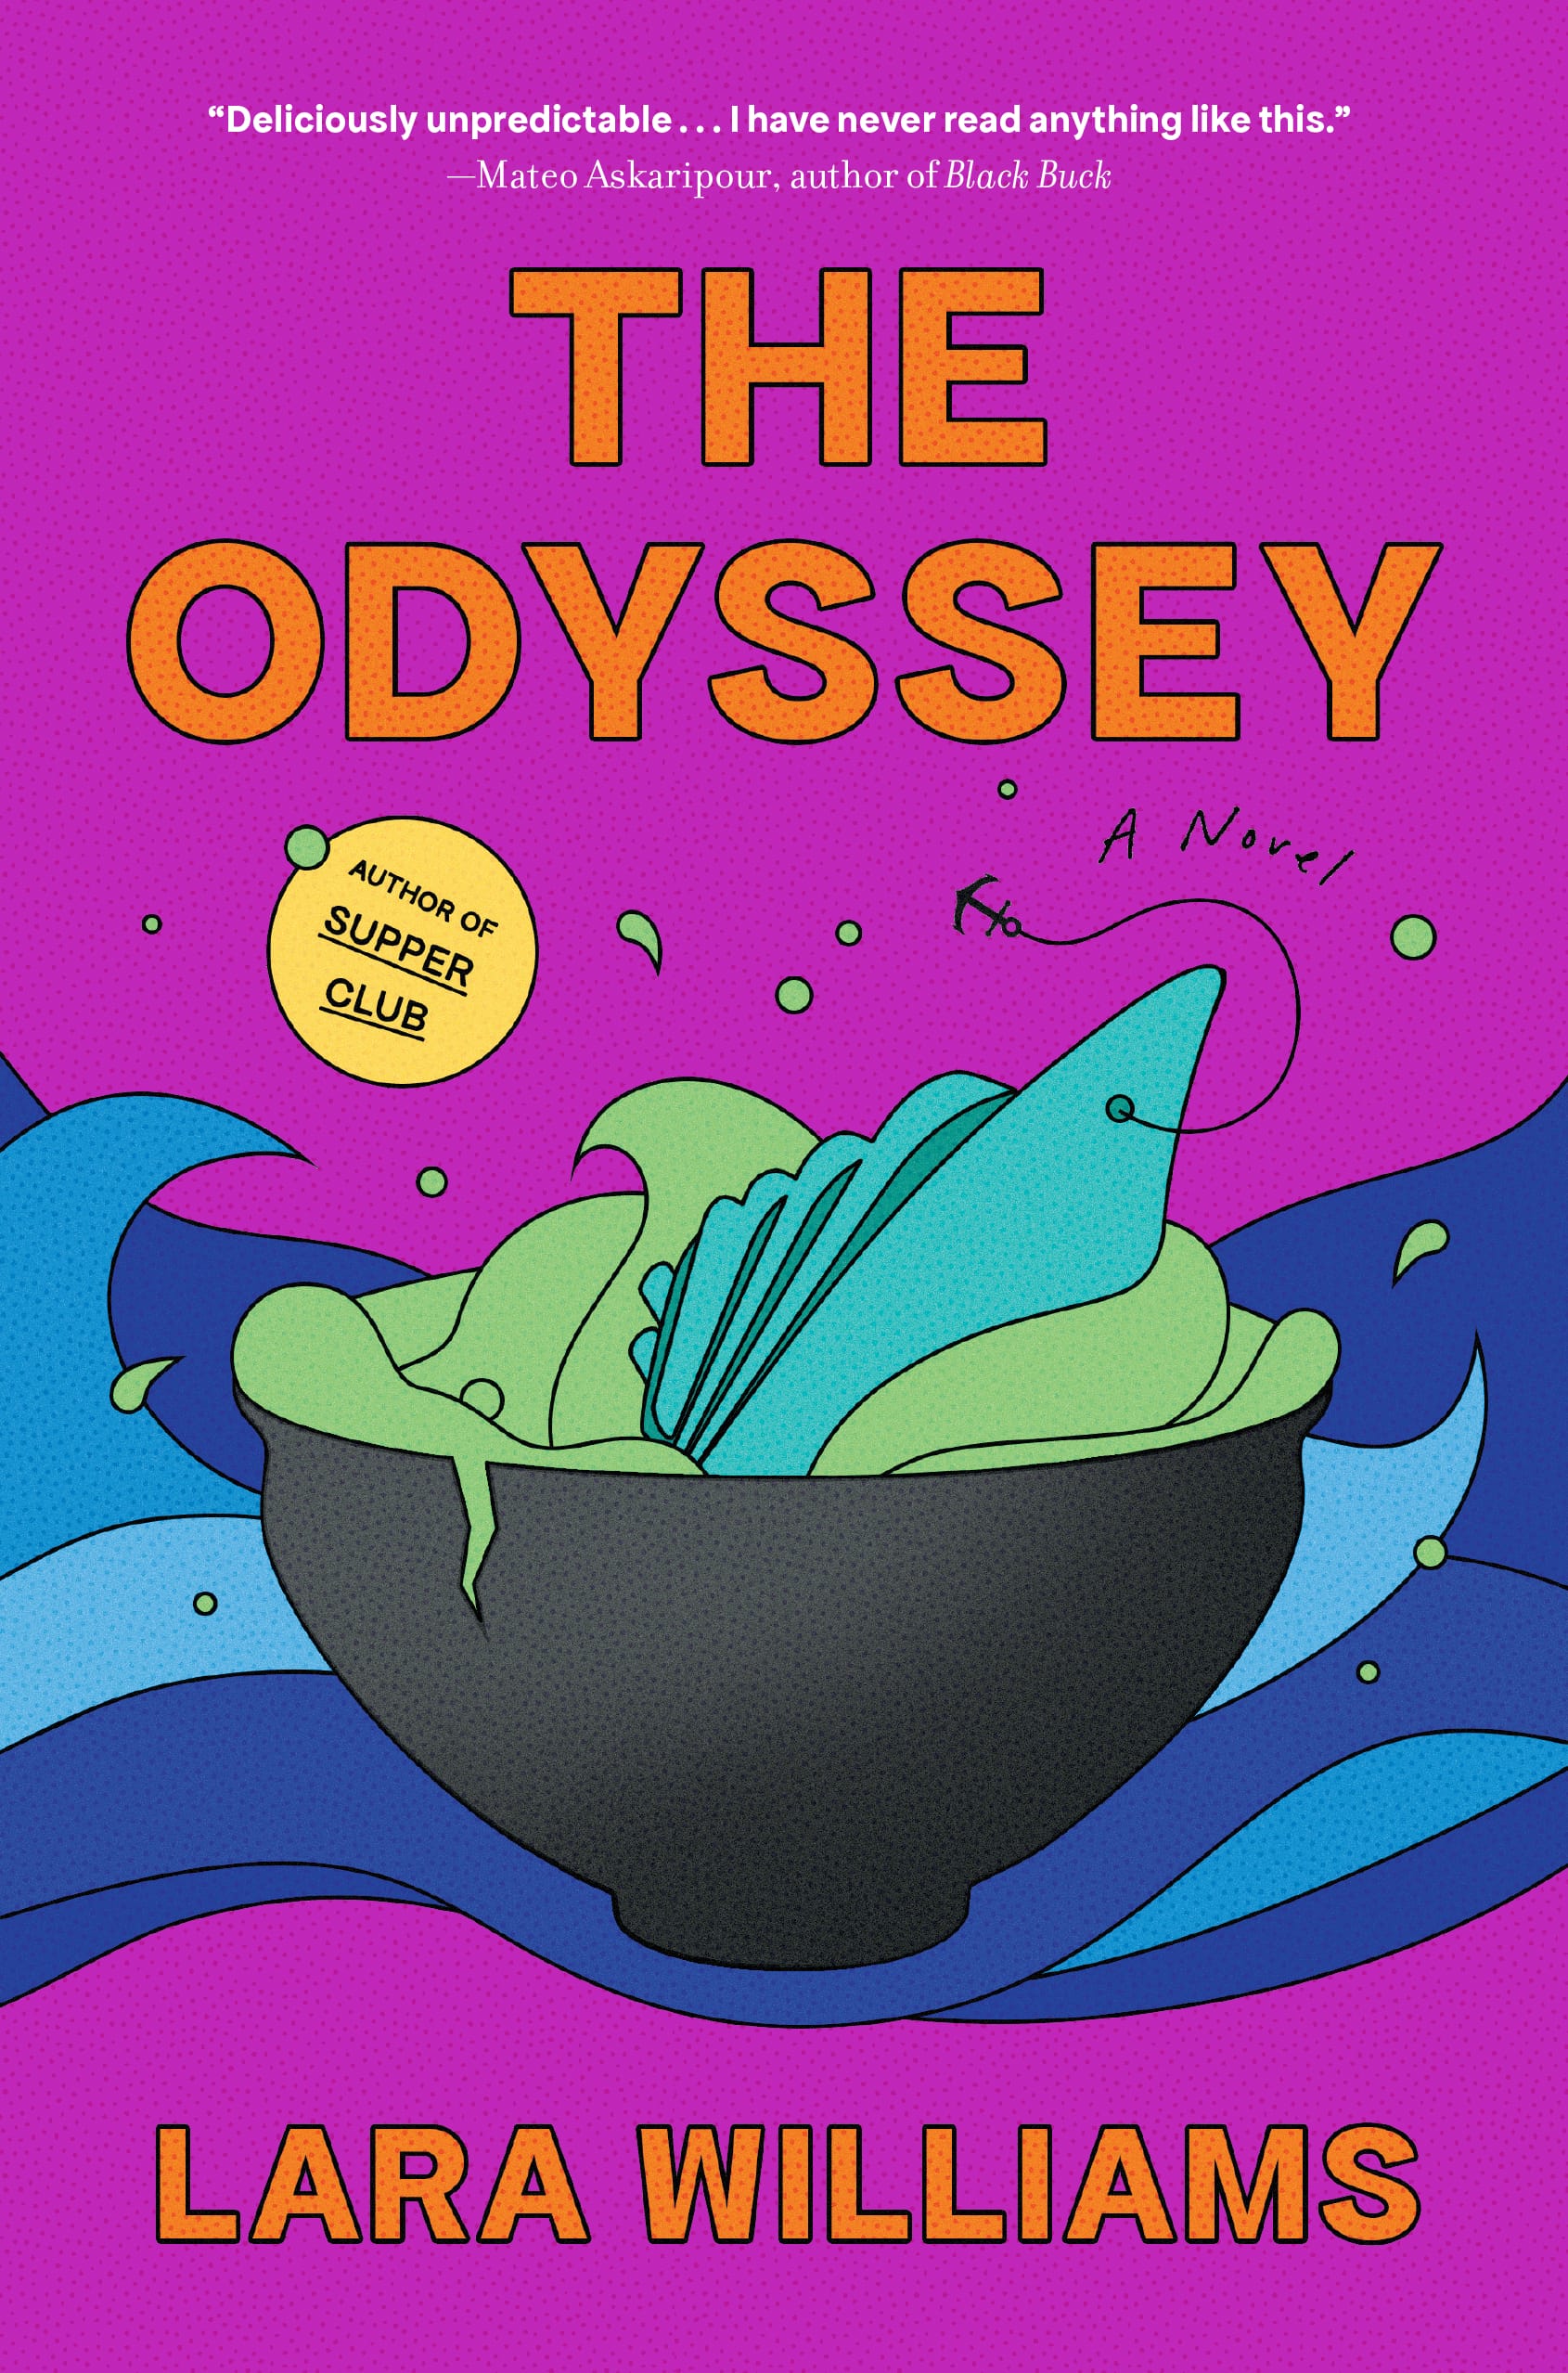 The Odyssey by Lara Williams